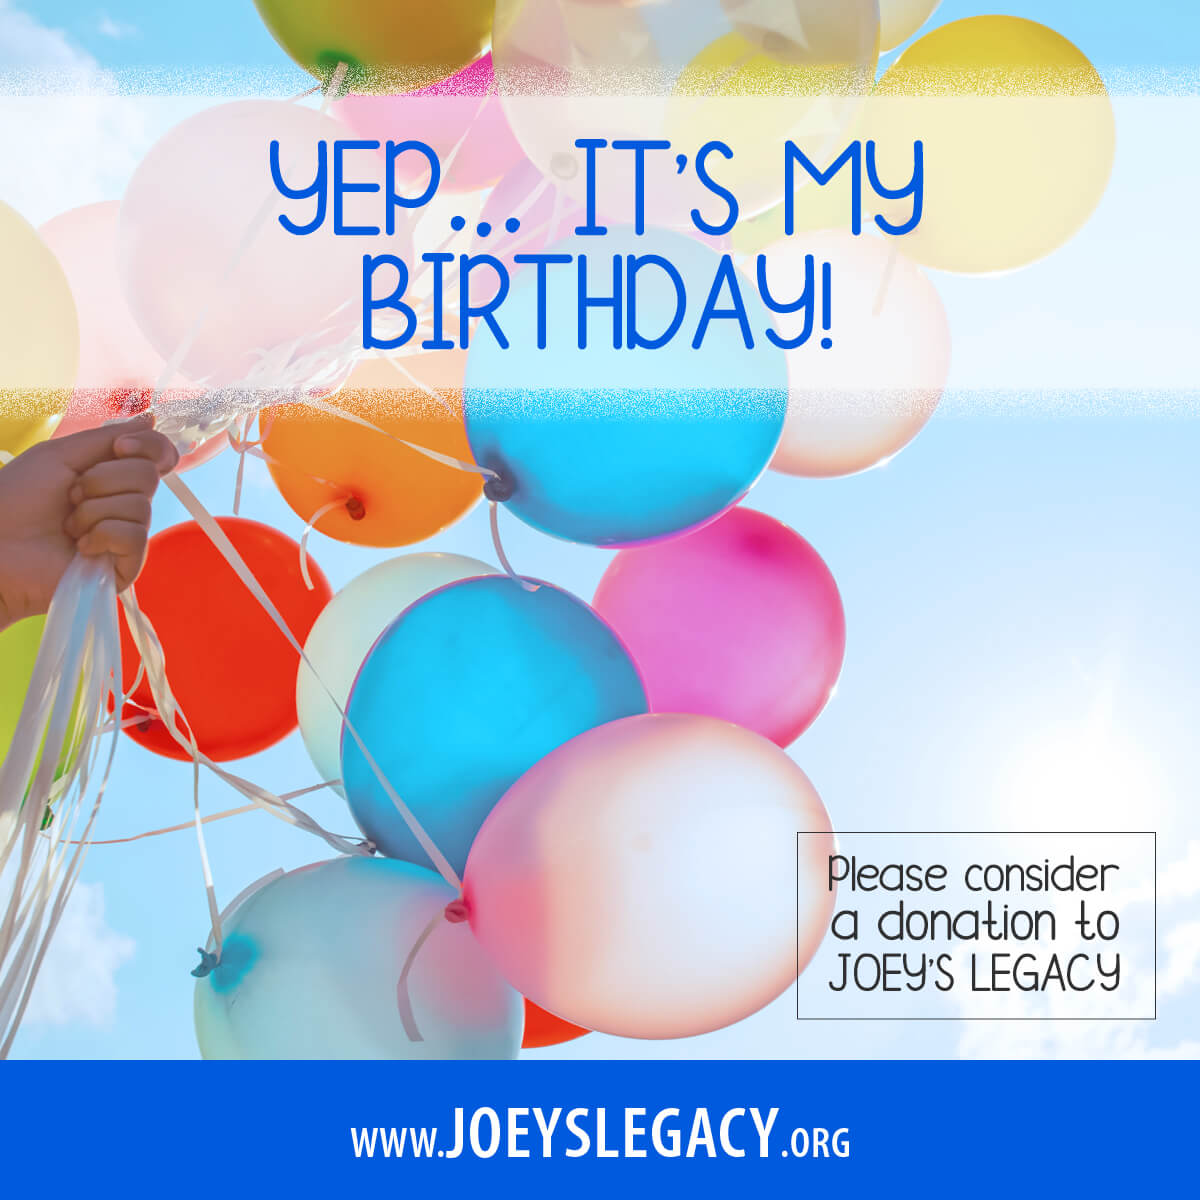 Joey's Legacy Social Media Post Yep… it's my birthday! Please consider a donation to Joey's Legacy.